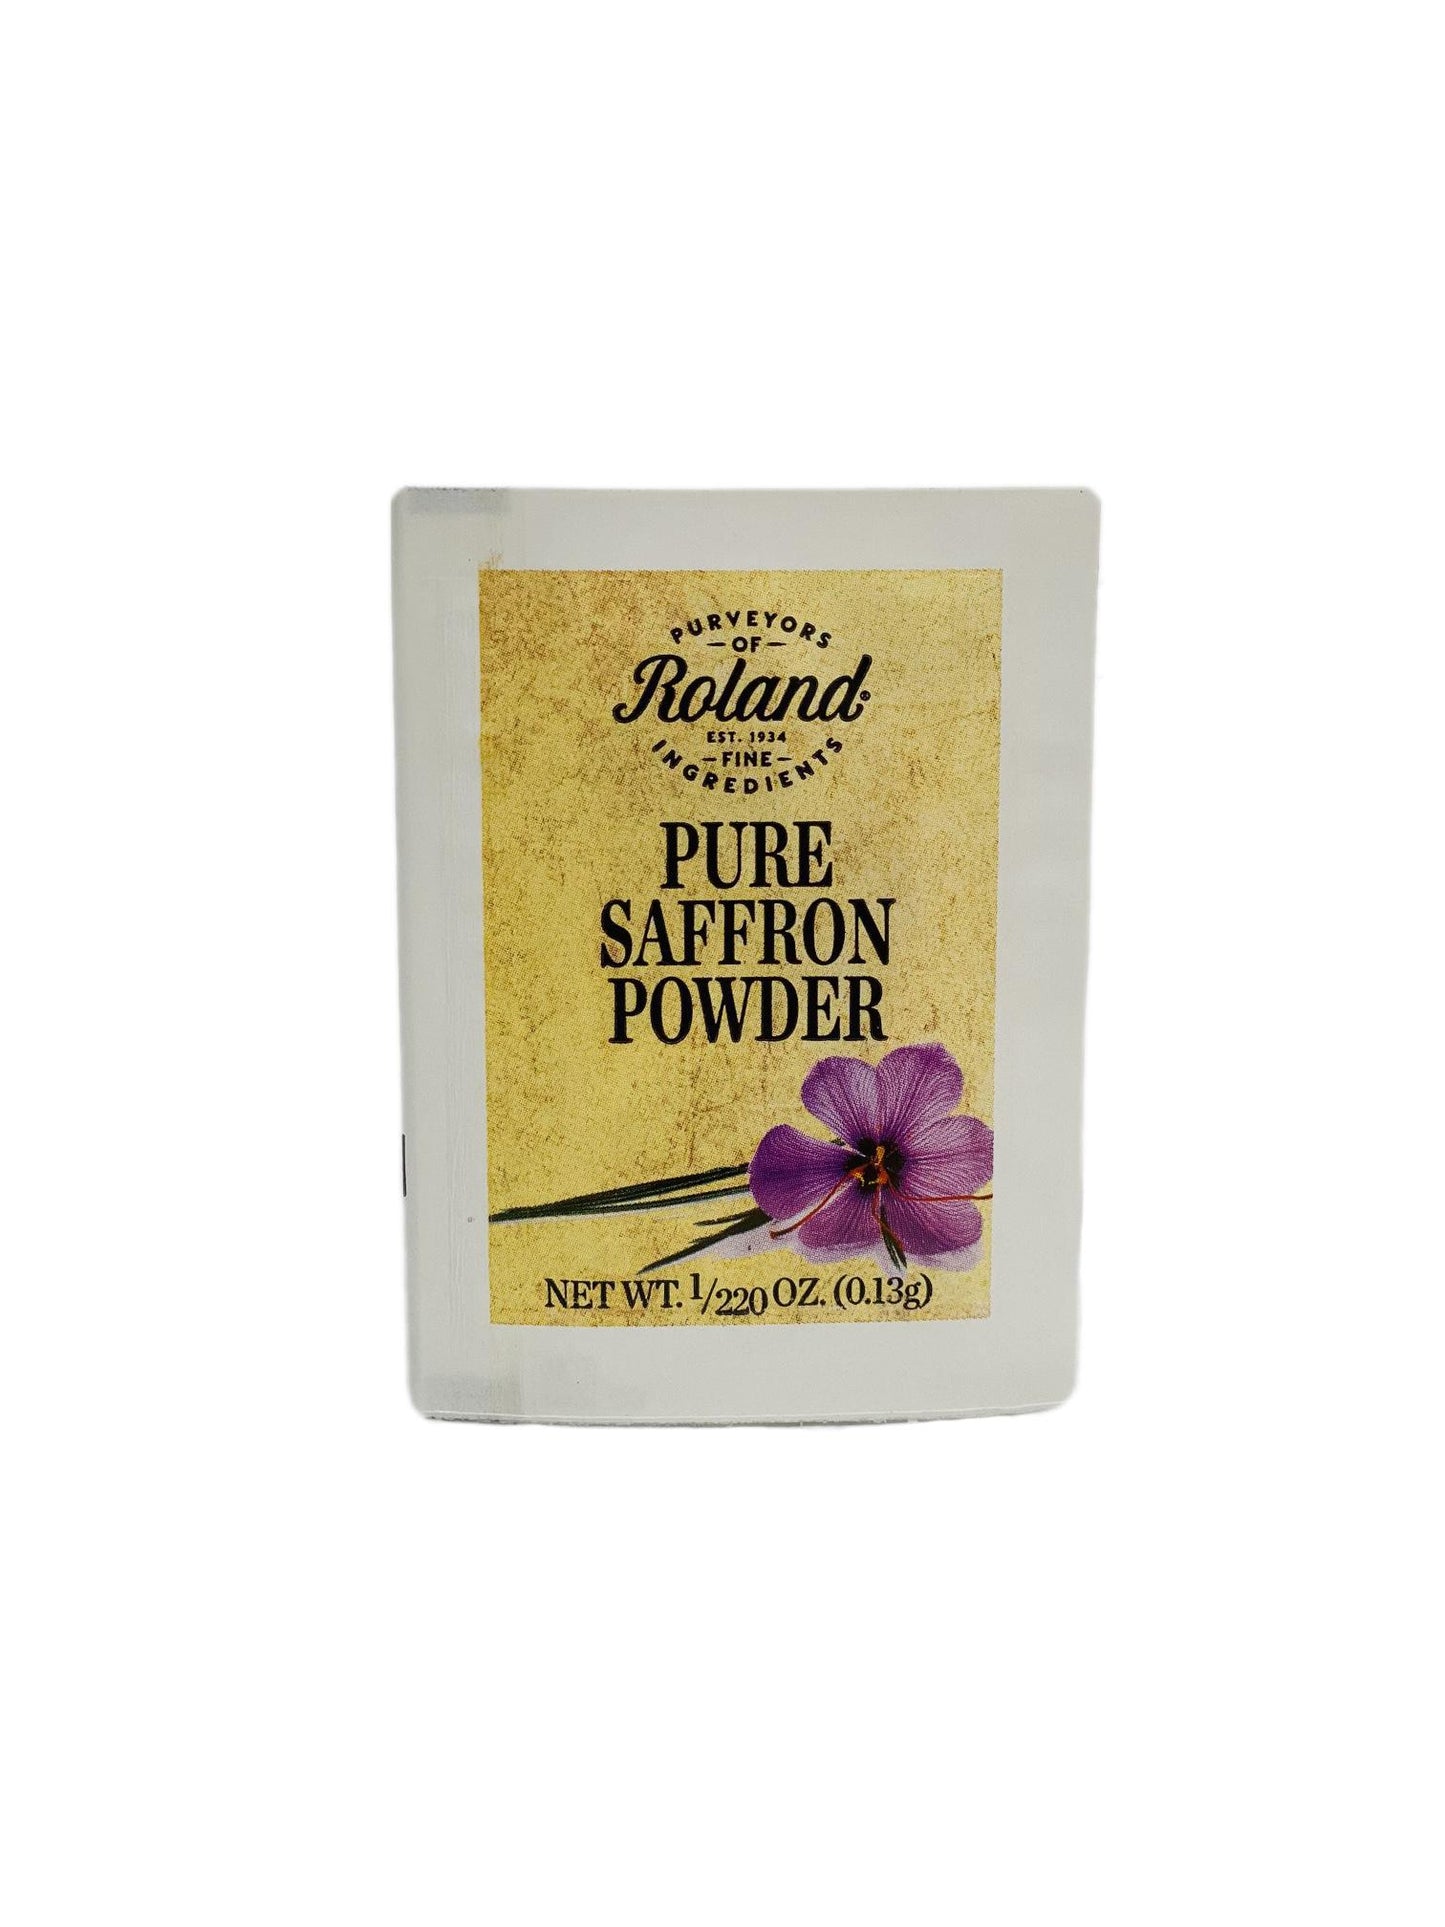 Roland Pure Saffron Powder, 1/220 oz